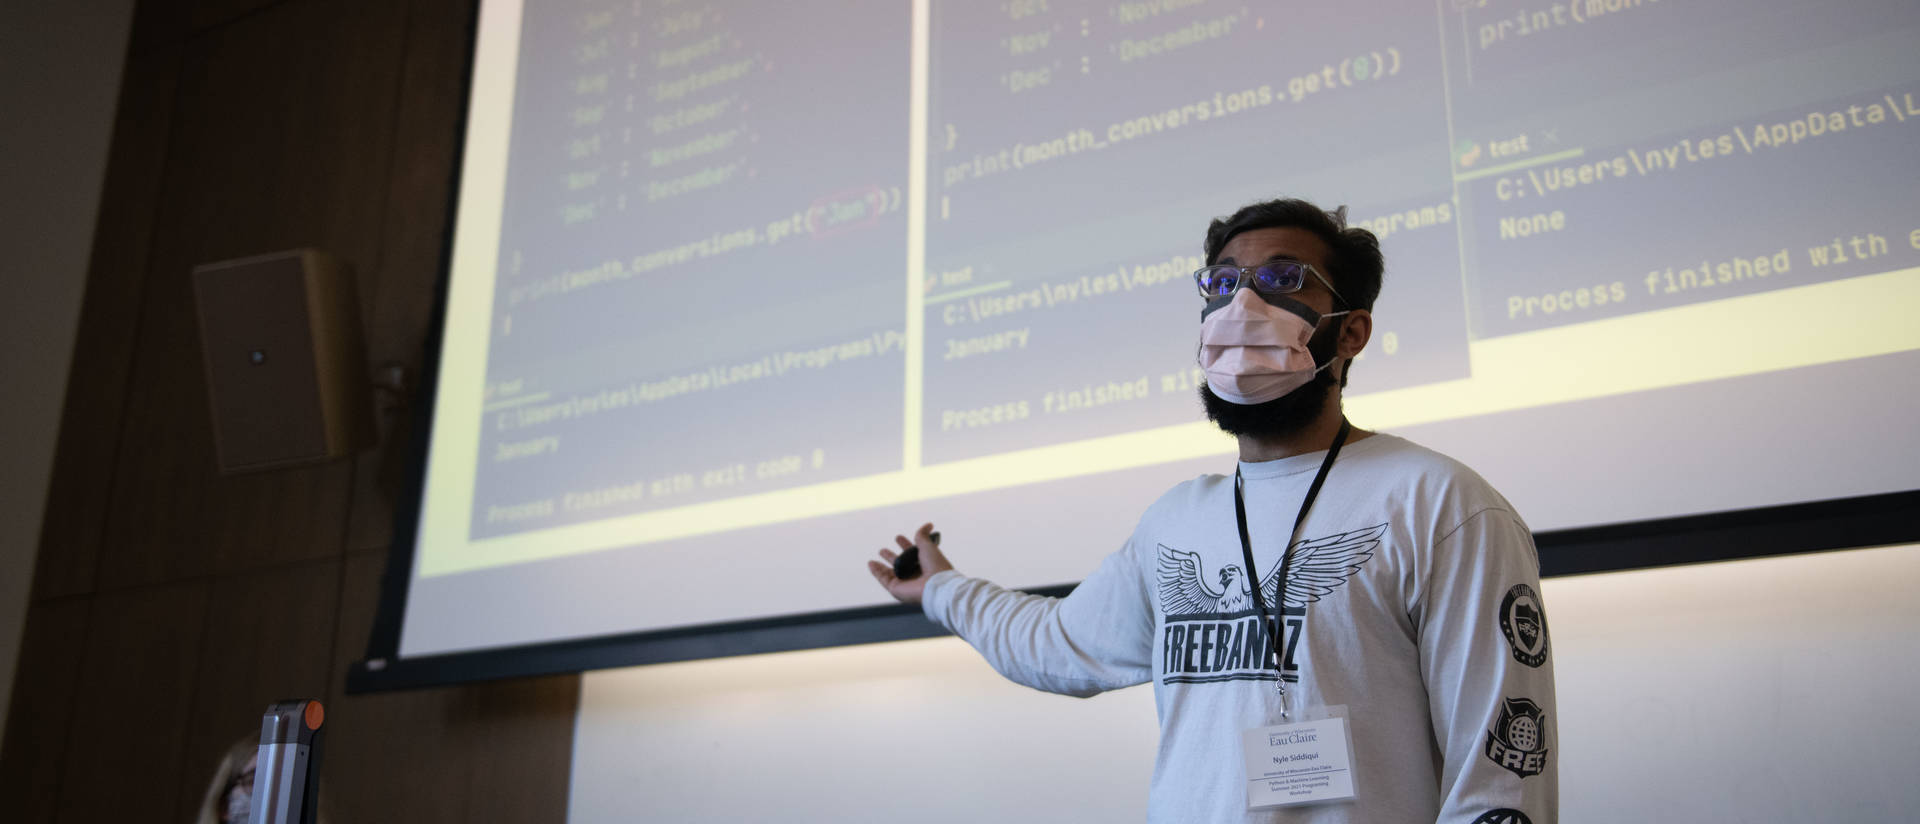 Software engineering student presenting at a computer programming camp